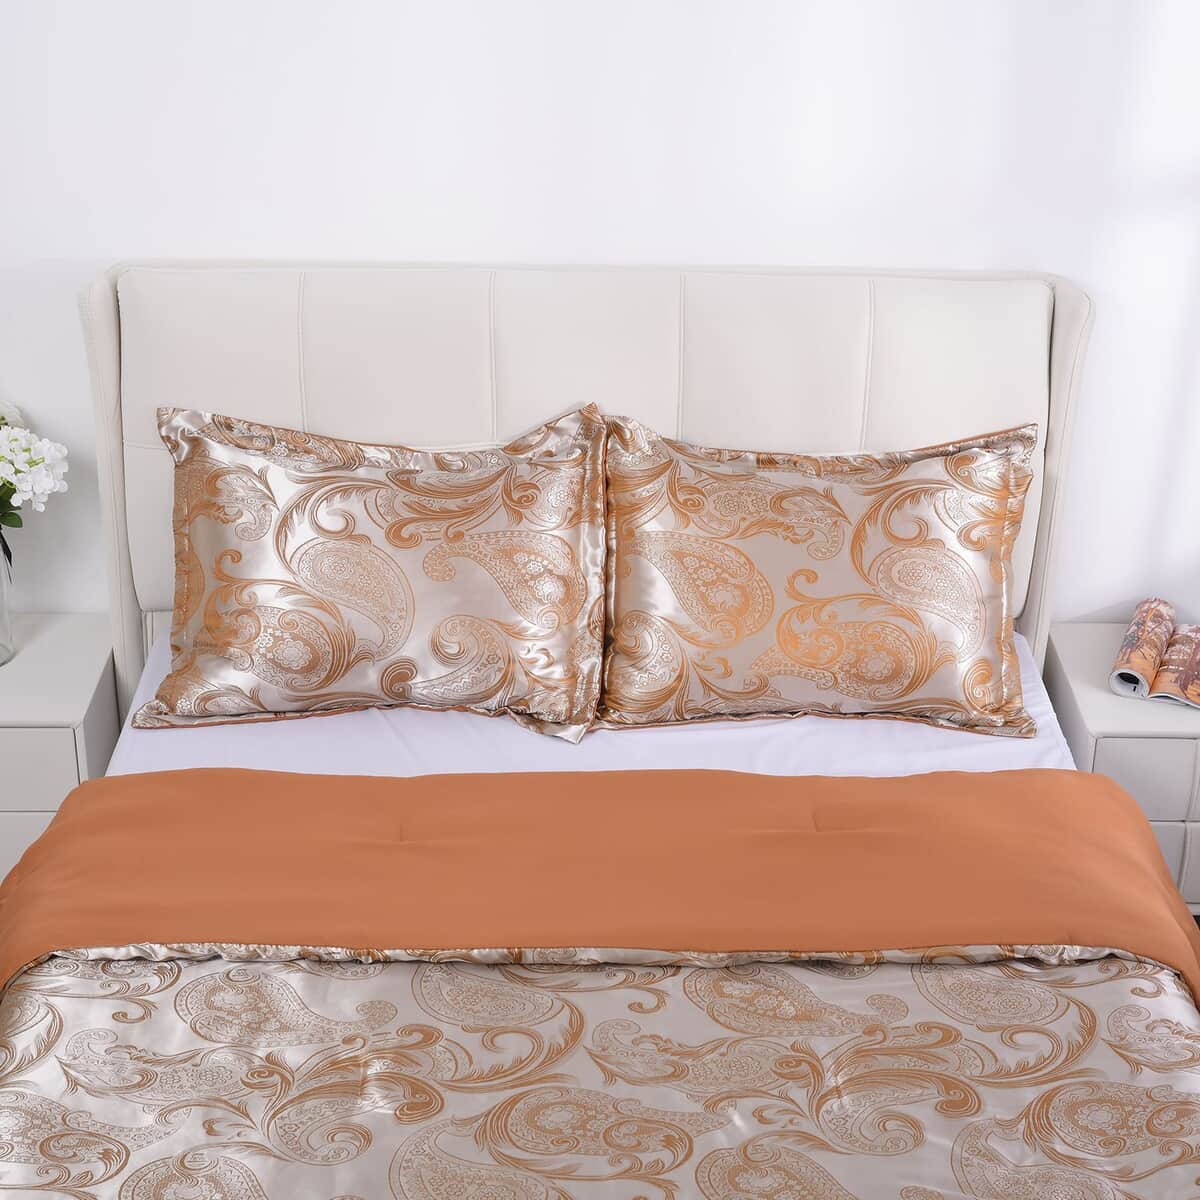 Homesmart Golden Satin Jacquard Floral Pattern Comforter Set - 1 Comforter and 2 Pillowcases (Queen Size) image number 3